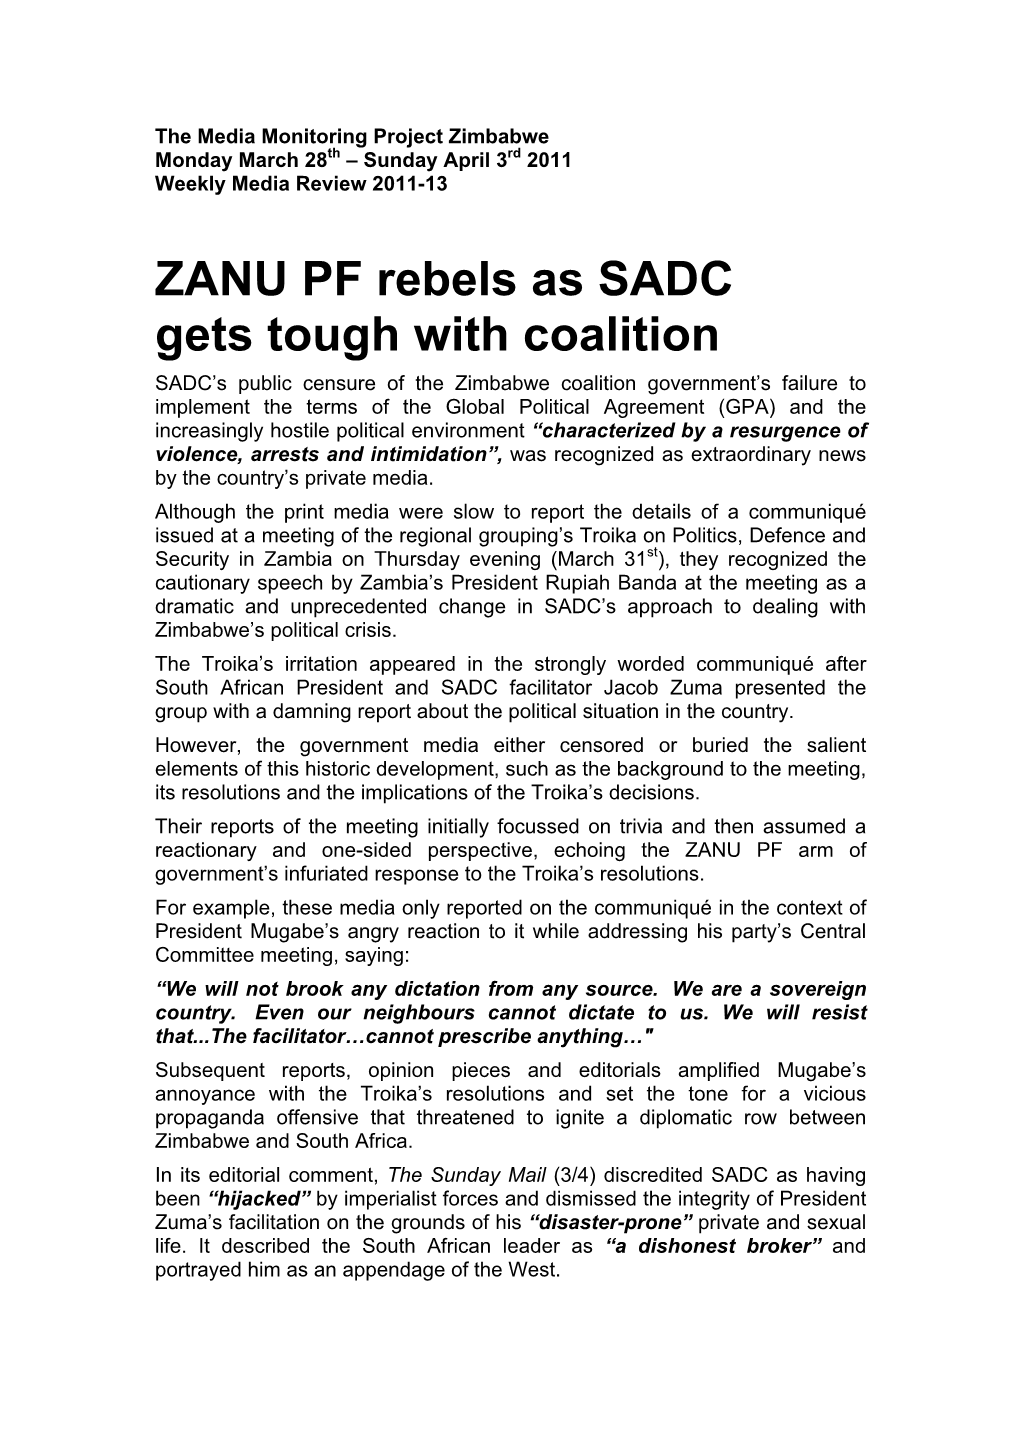 ZANU PF Rebels As SADC Gets Tough with Coalition